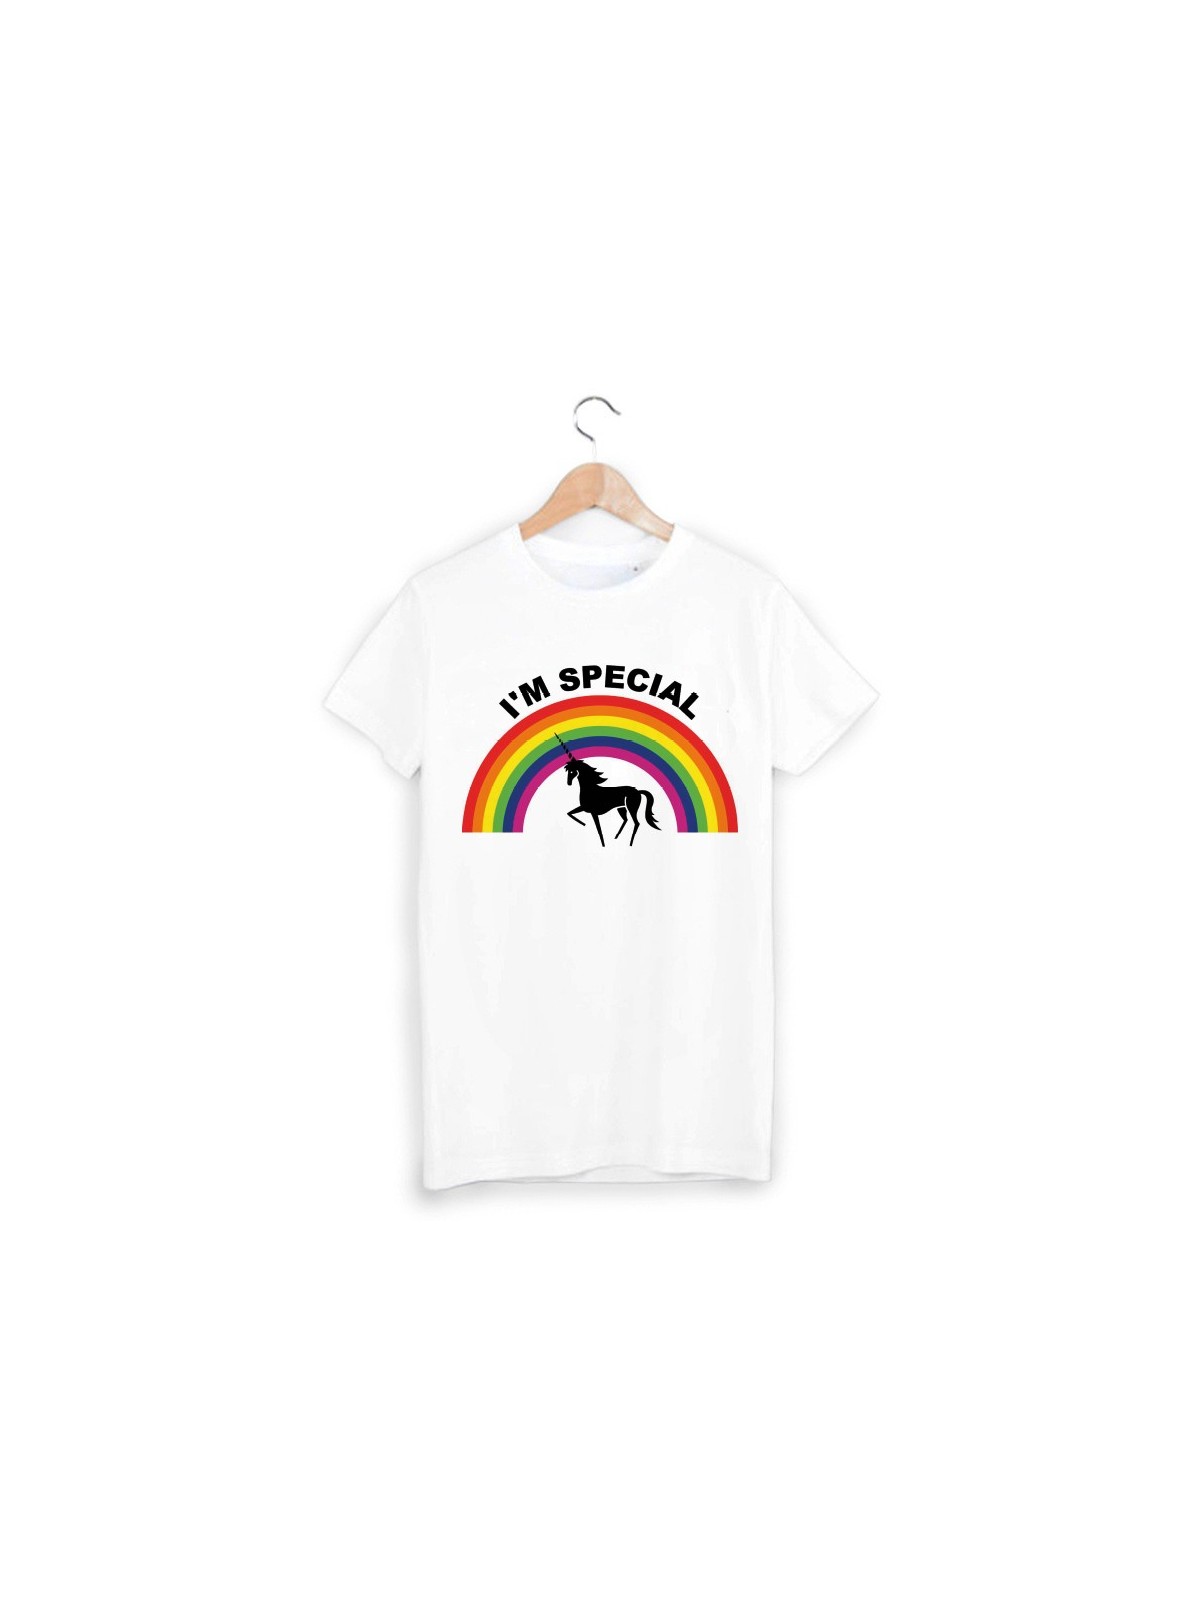 T-Shirt licorne ref 863